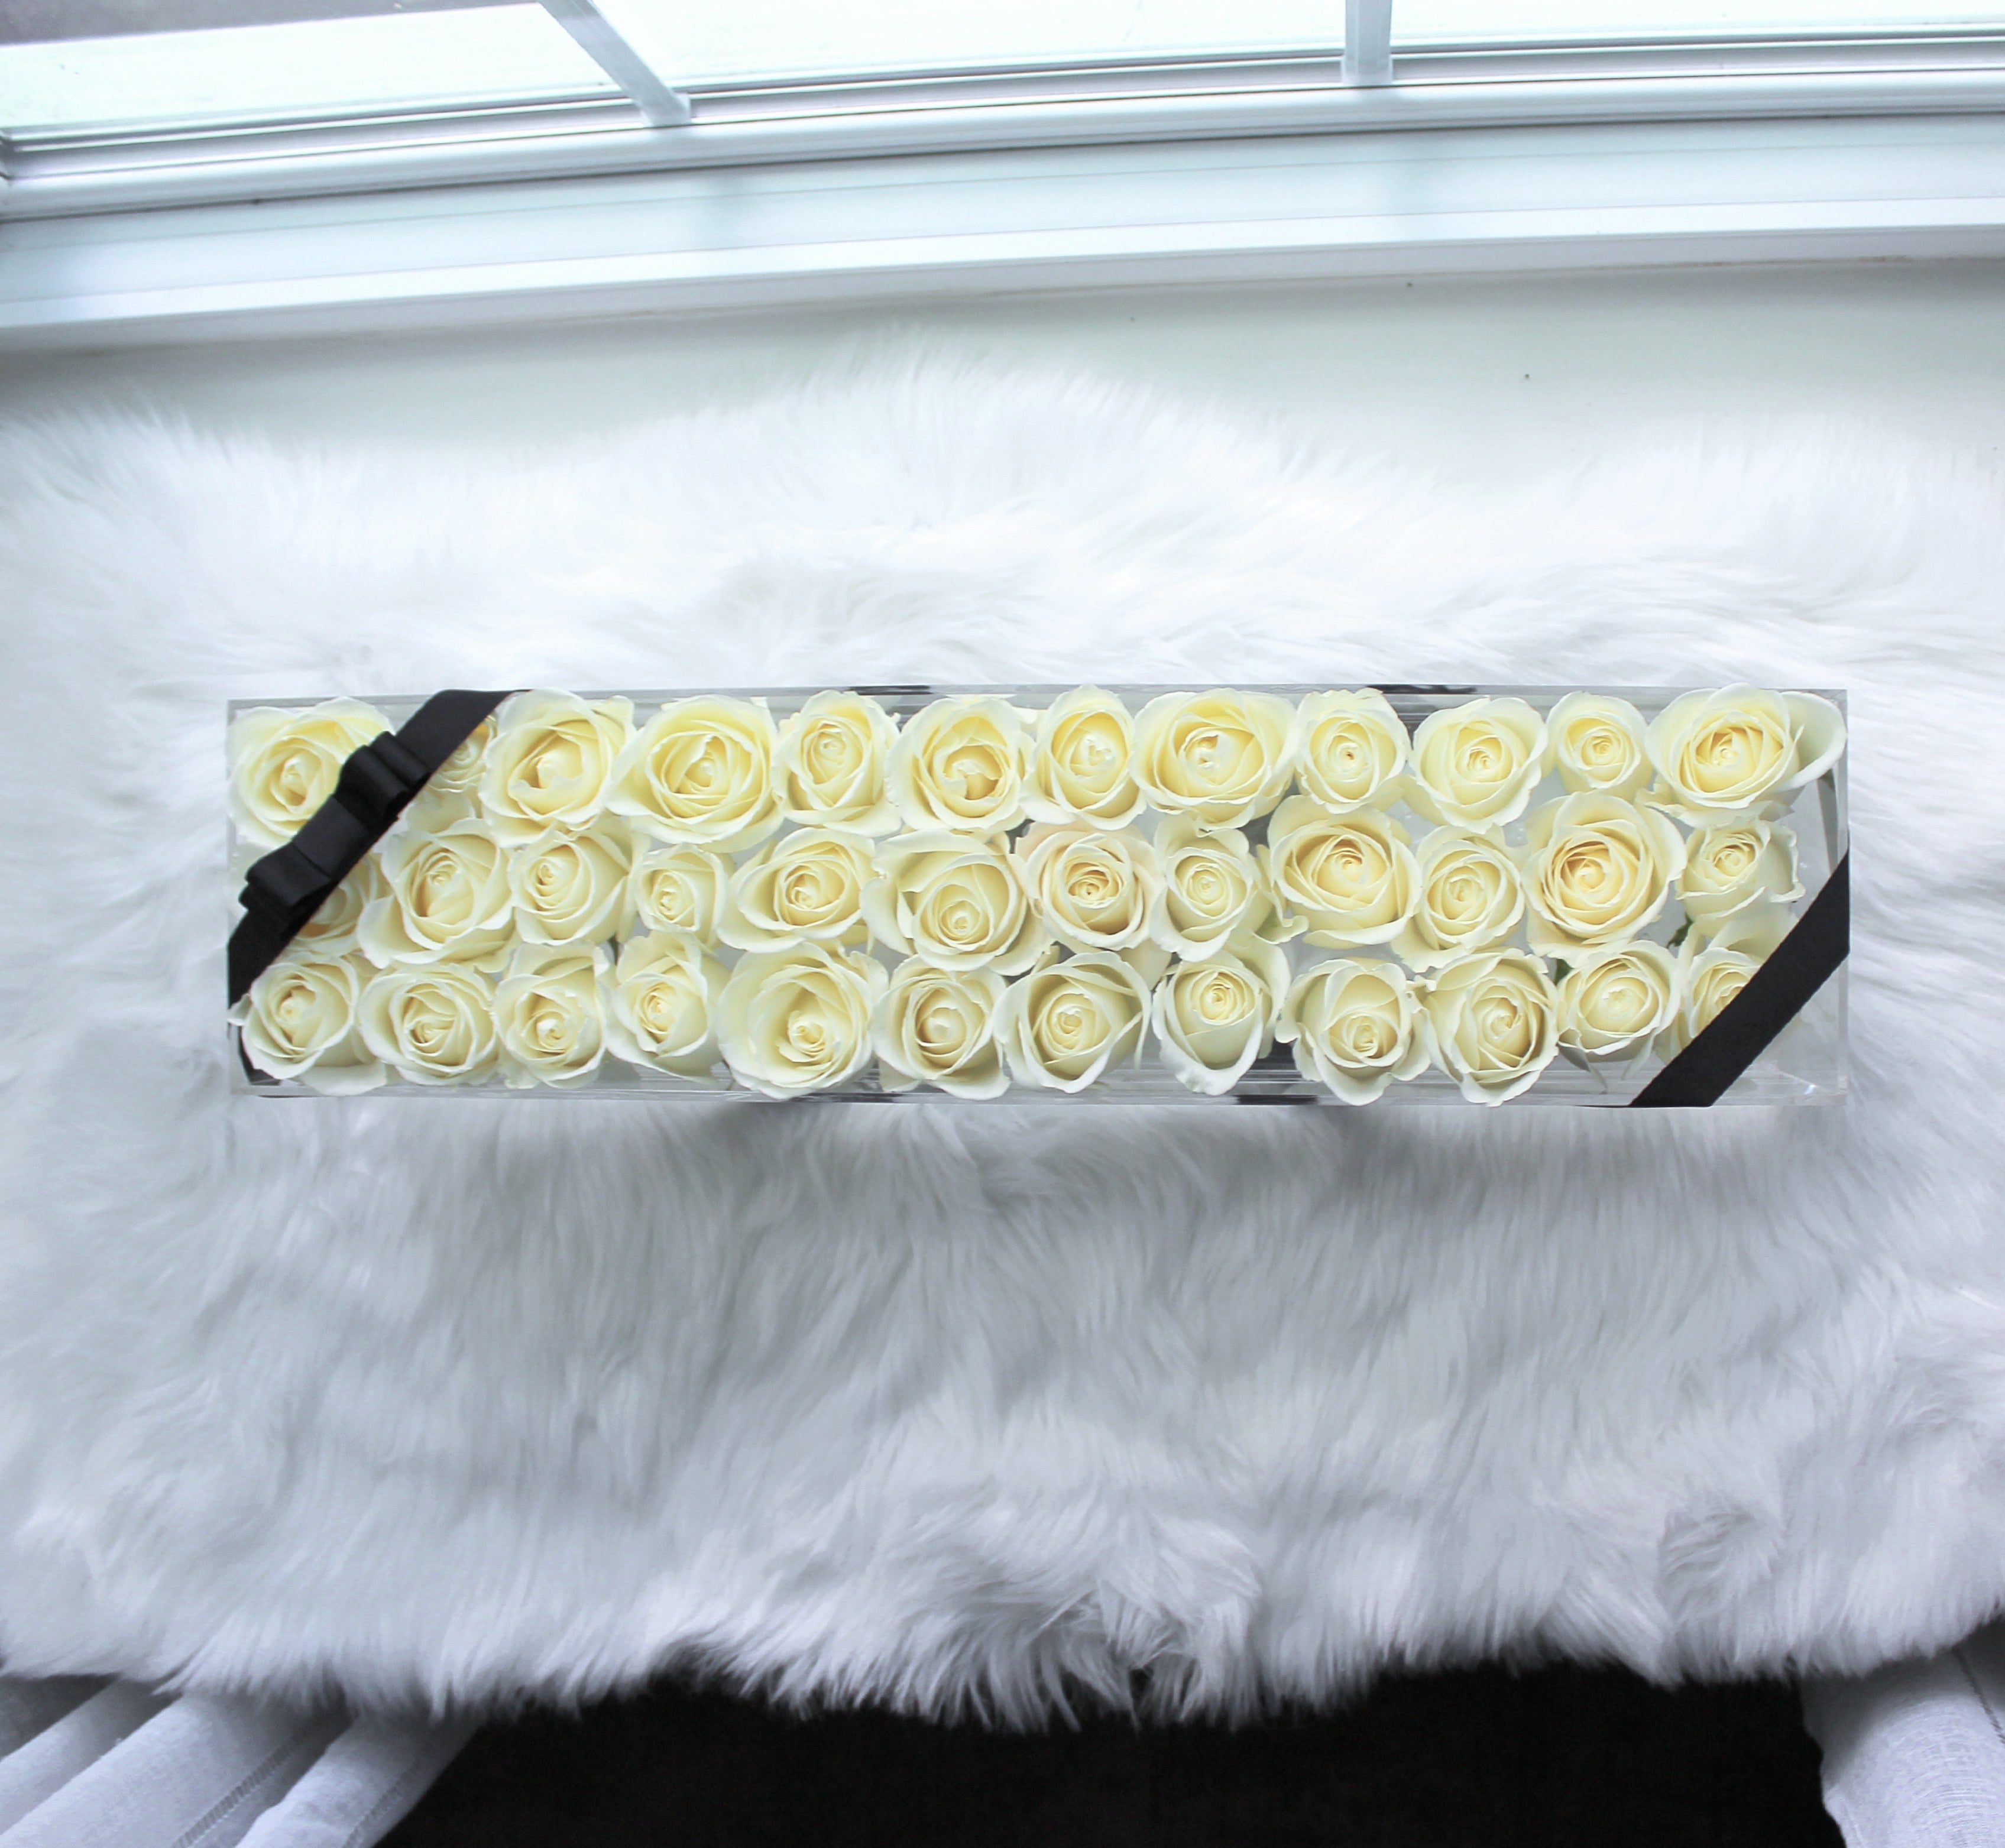 39 Fresh-Cut Rose Bouquet in Luxurious Centerpiece